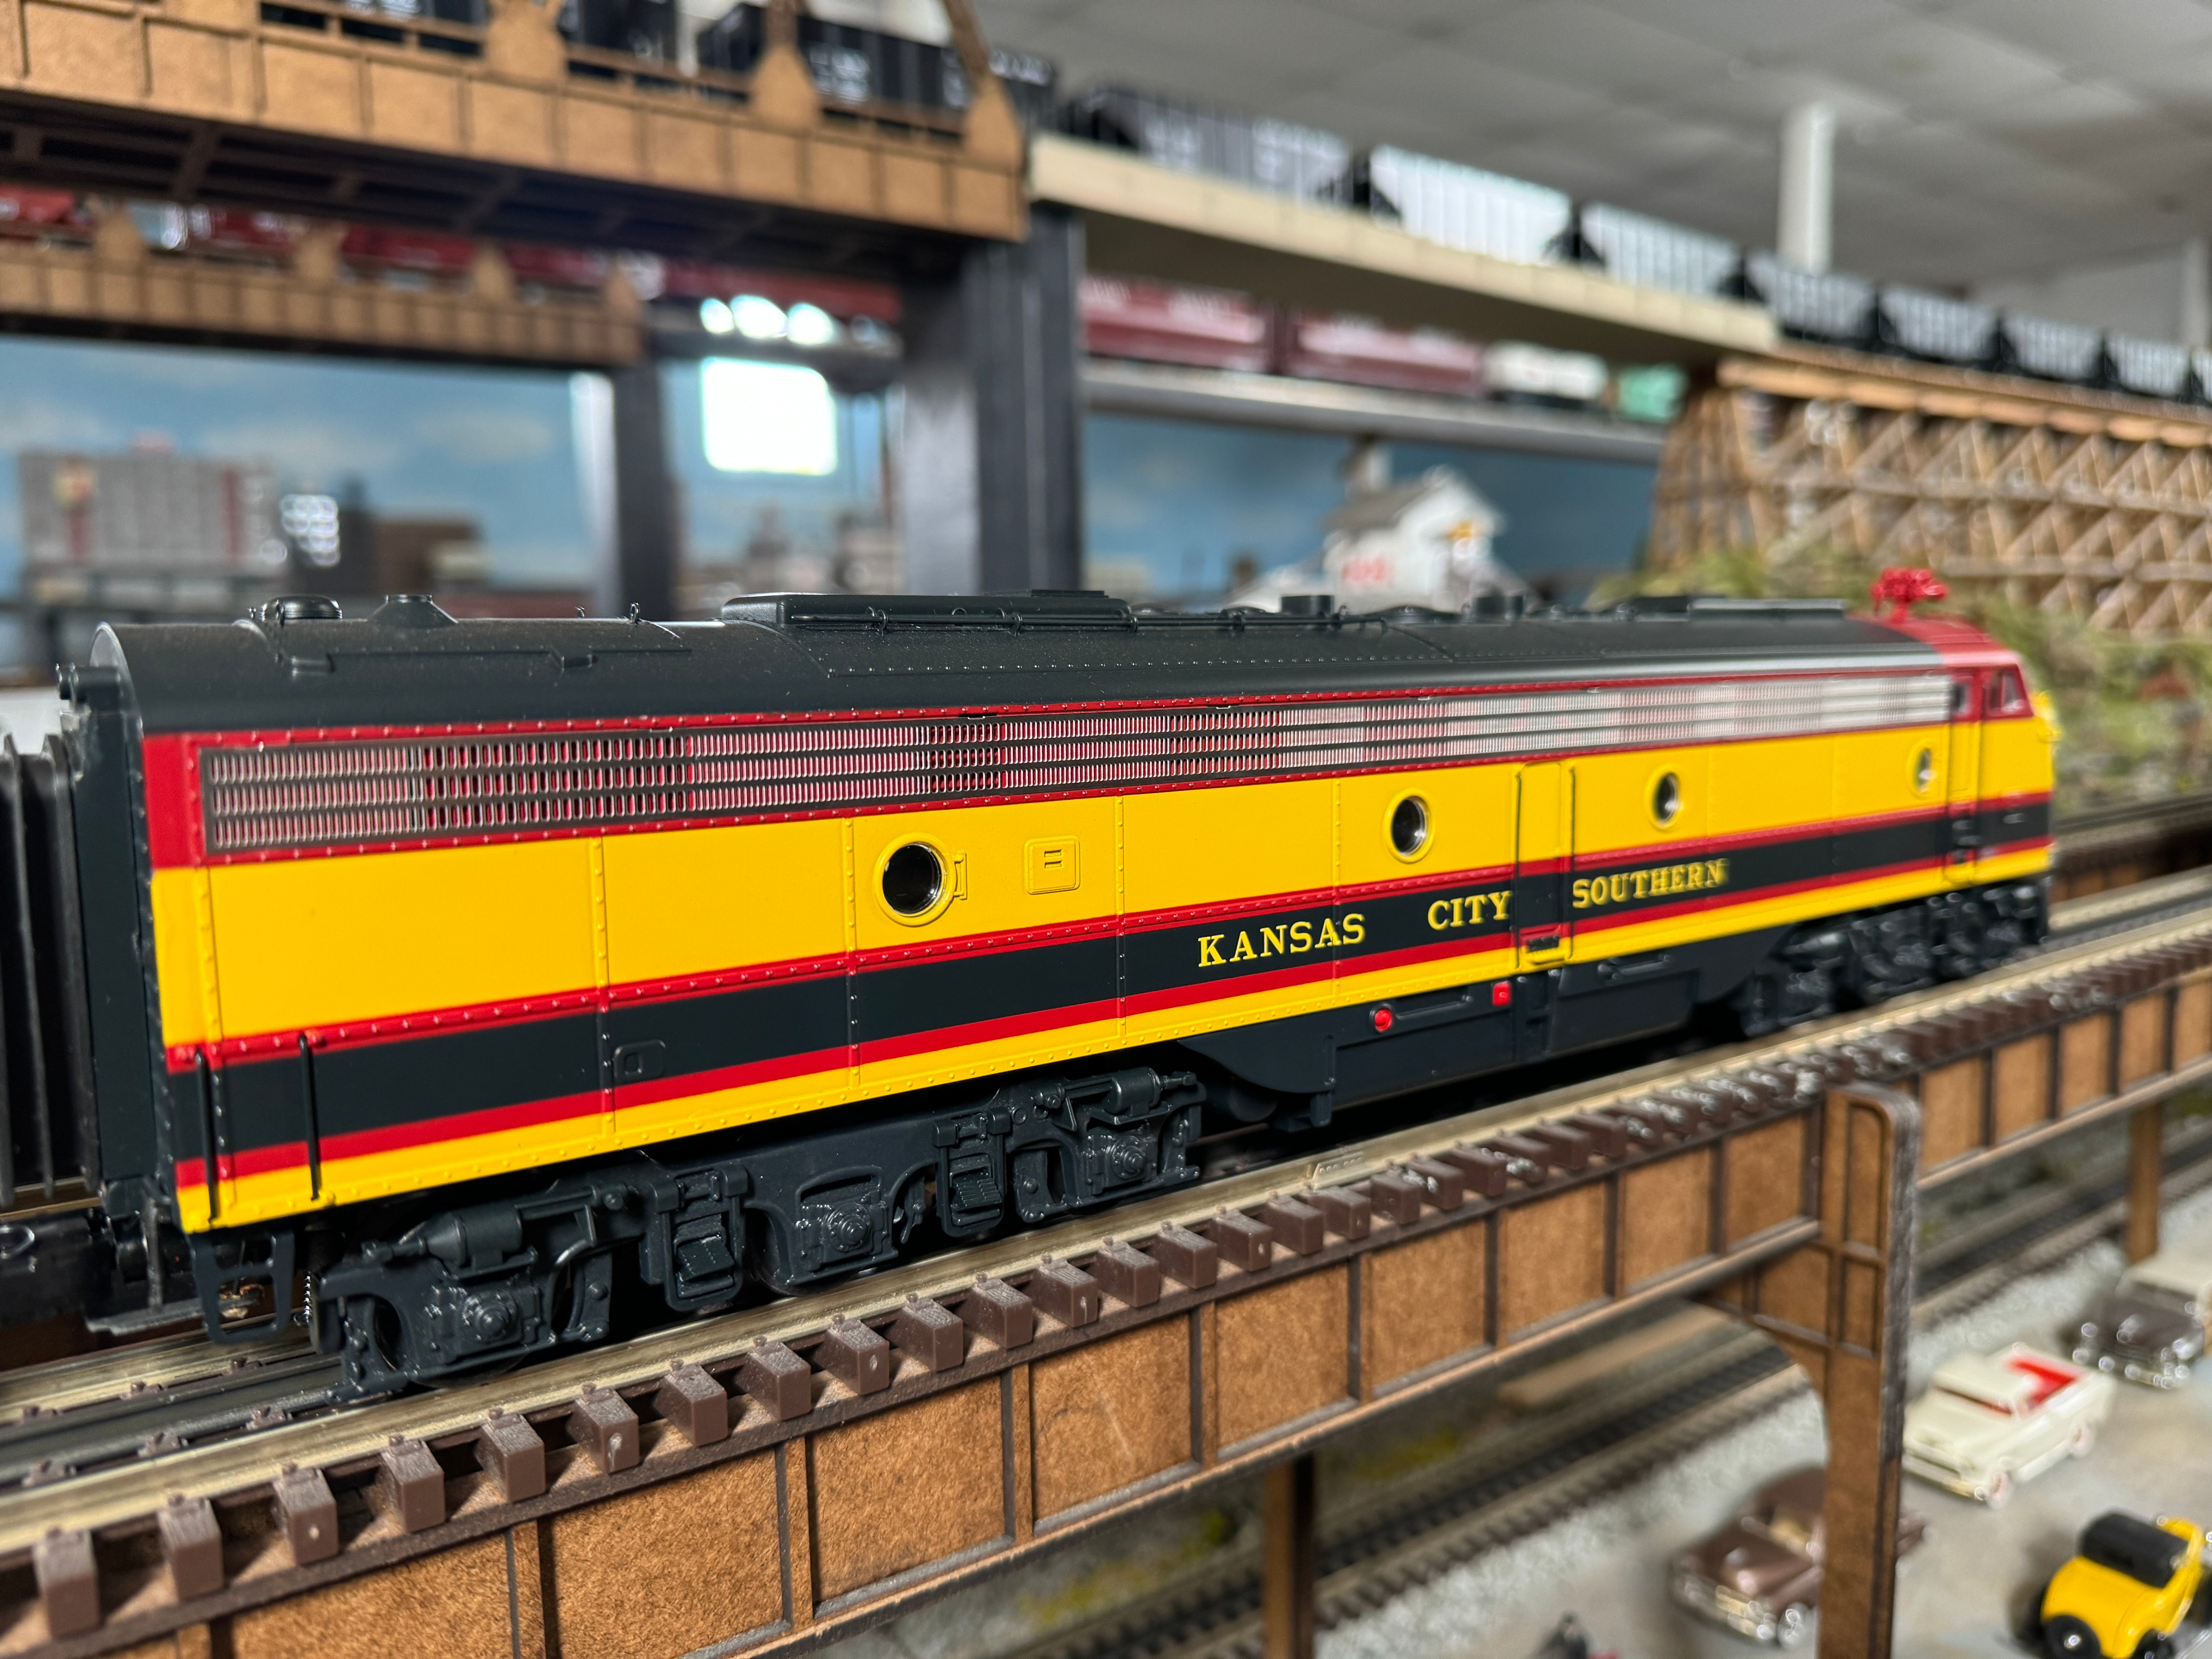 Atlas O 30138239 - Premier - E8 Diesel Locomotive "Kansas City Southern" #25 w/ PS3 (Powered)